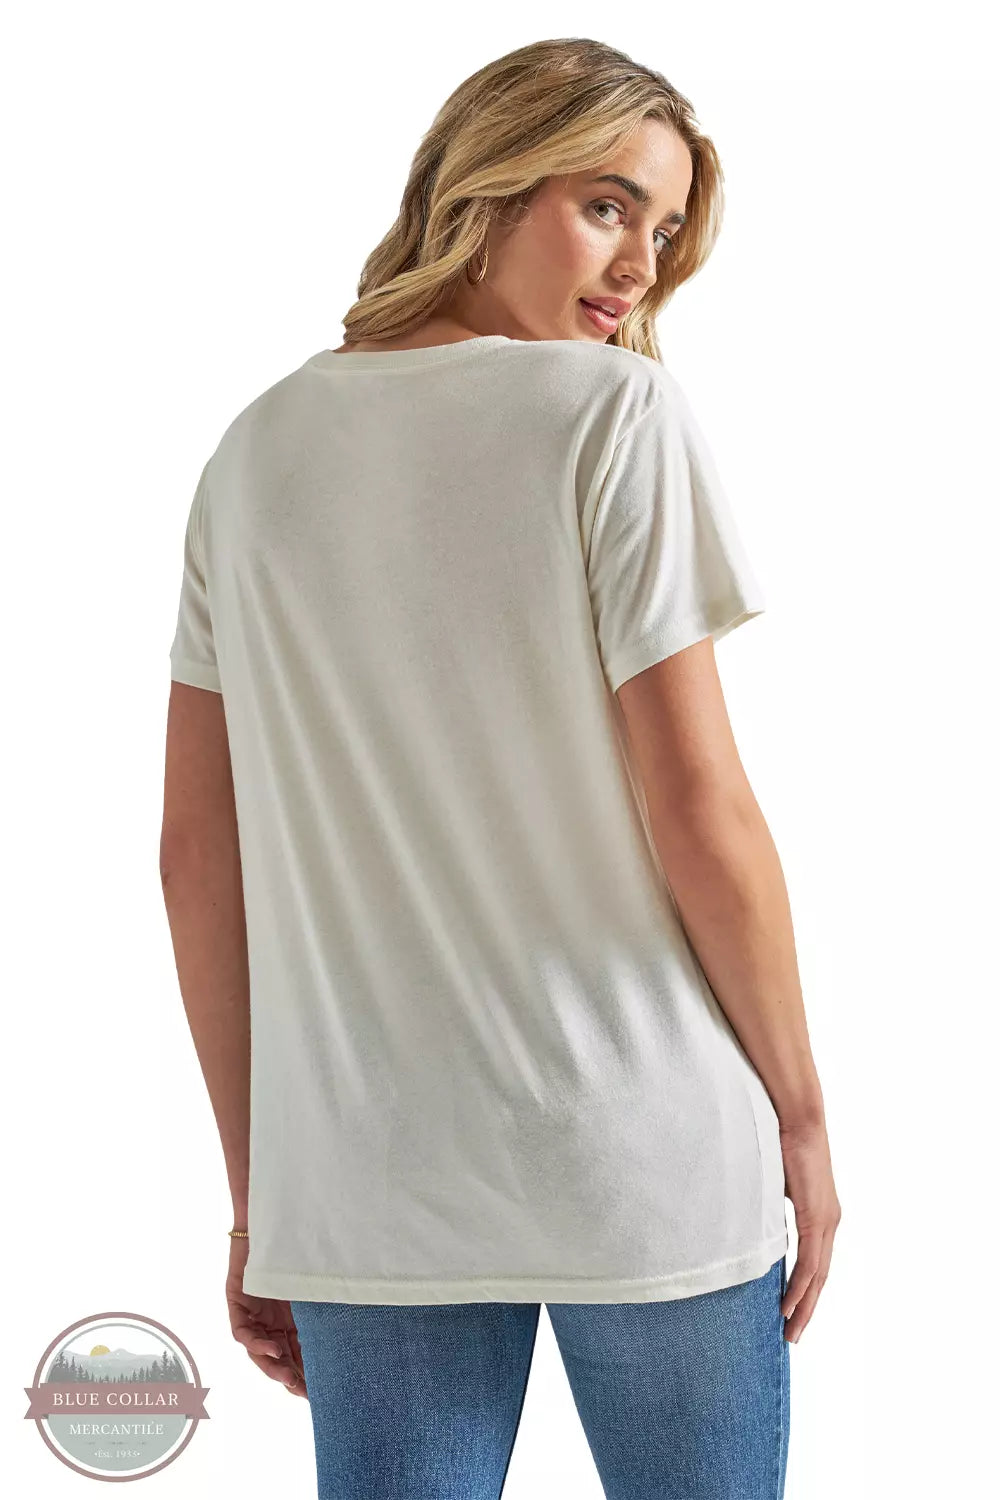 Wrangler 112339528 Long Live Cowboys T-Shirt in White Back View